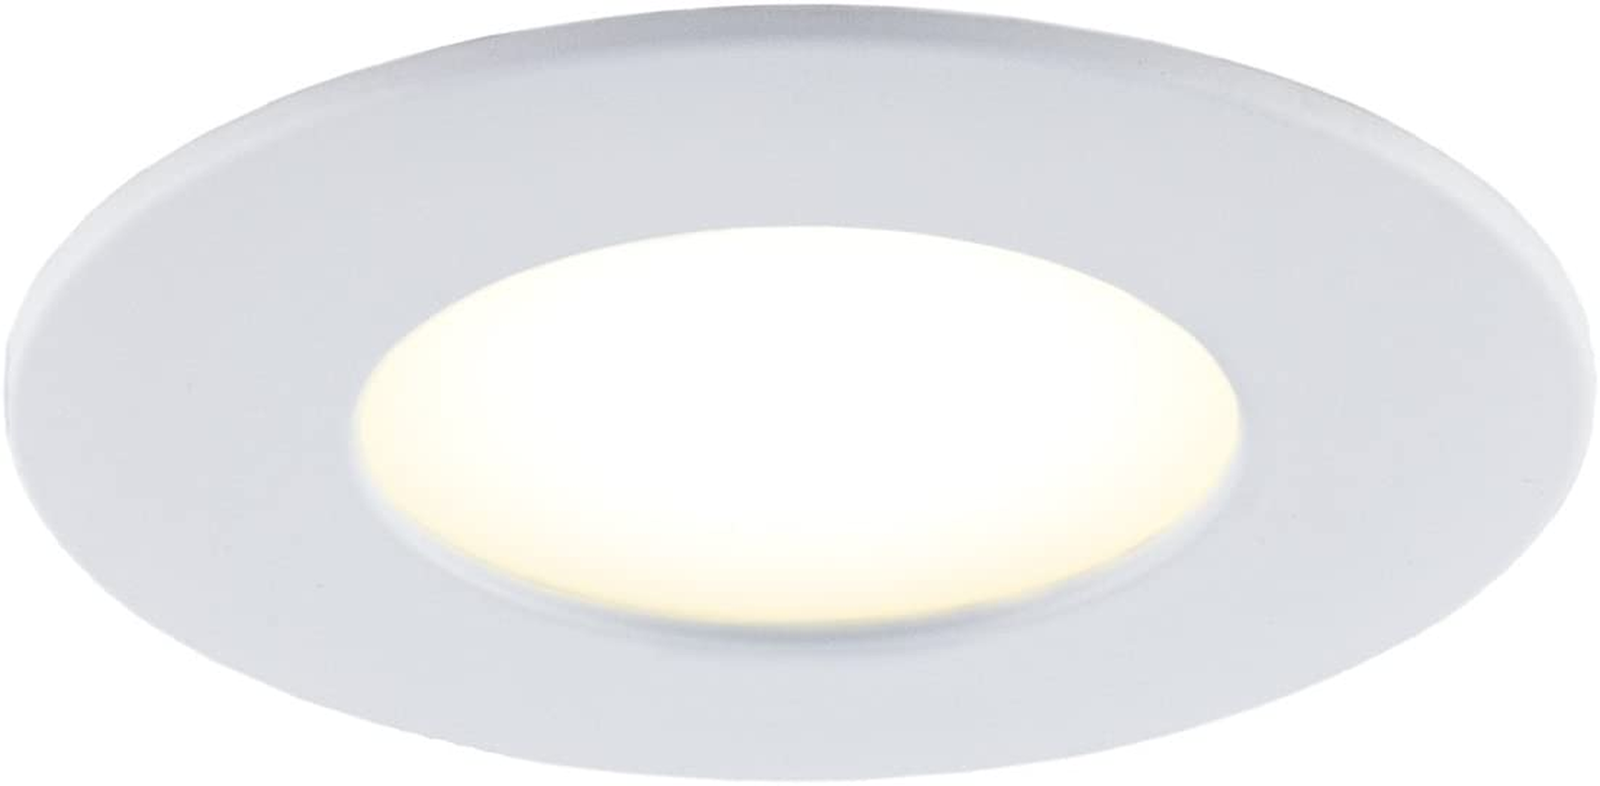 6 Inch WIFI smart flat slim LED Downlight 12W RGB with Junction Box 900LM 100-130V AC ETL listed - Eco LED Lightings 